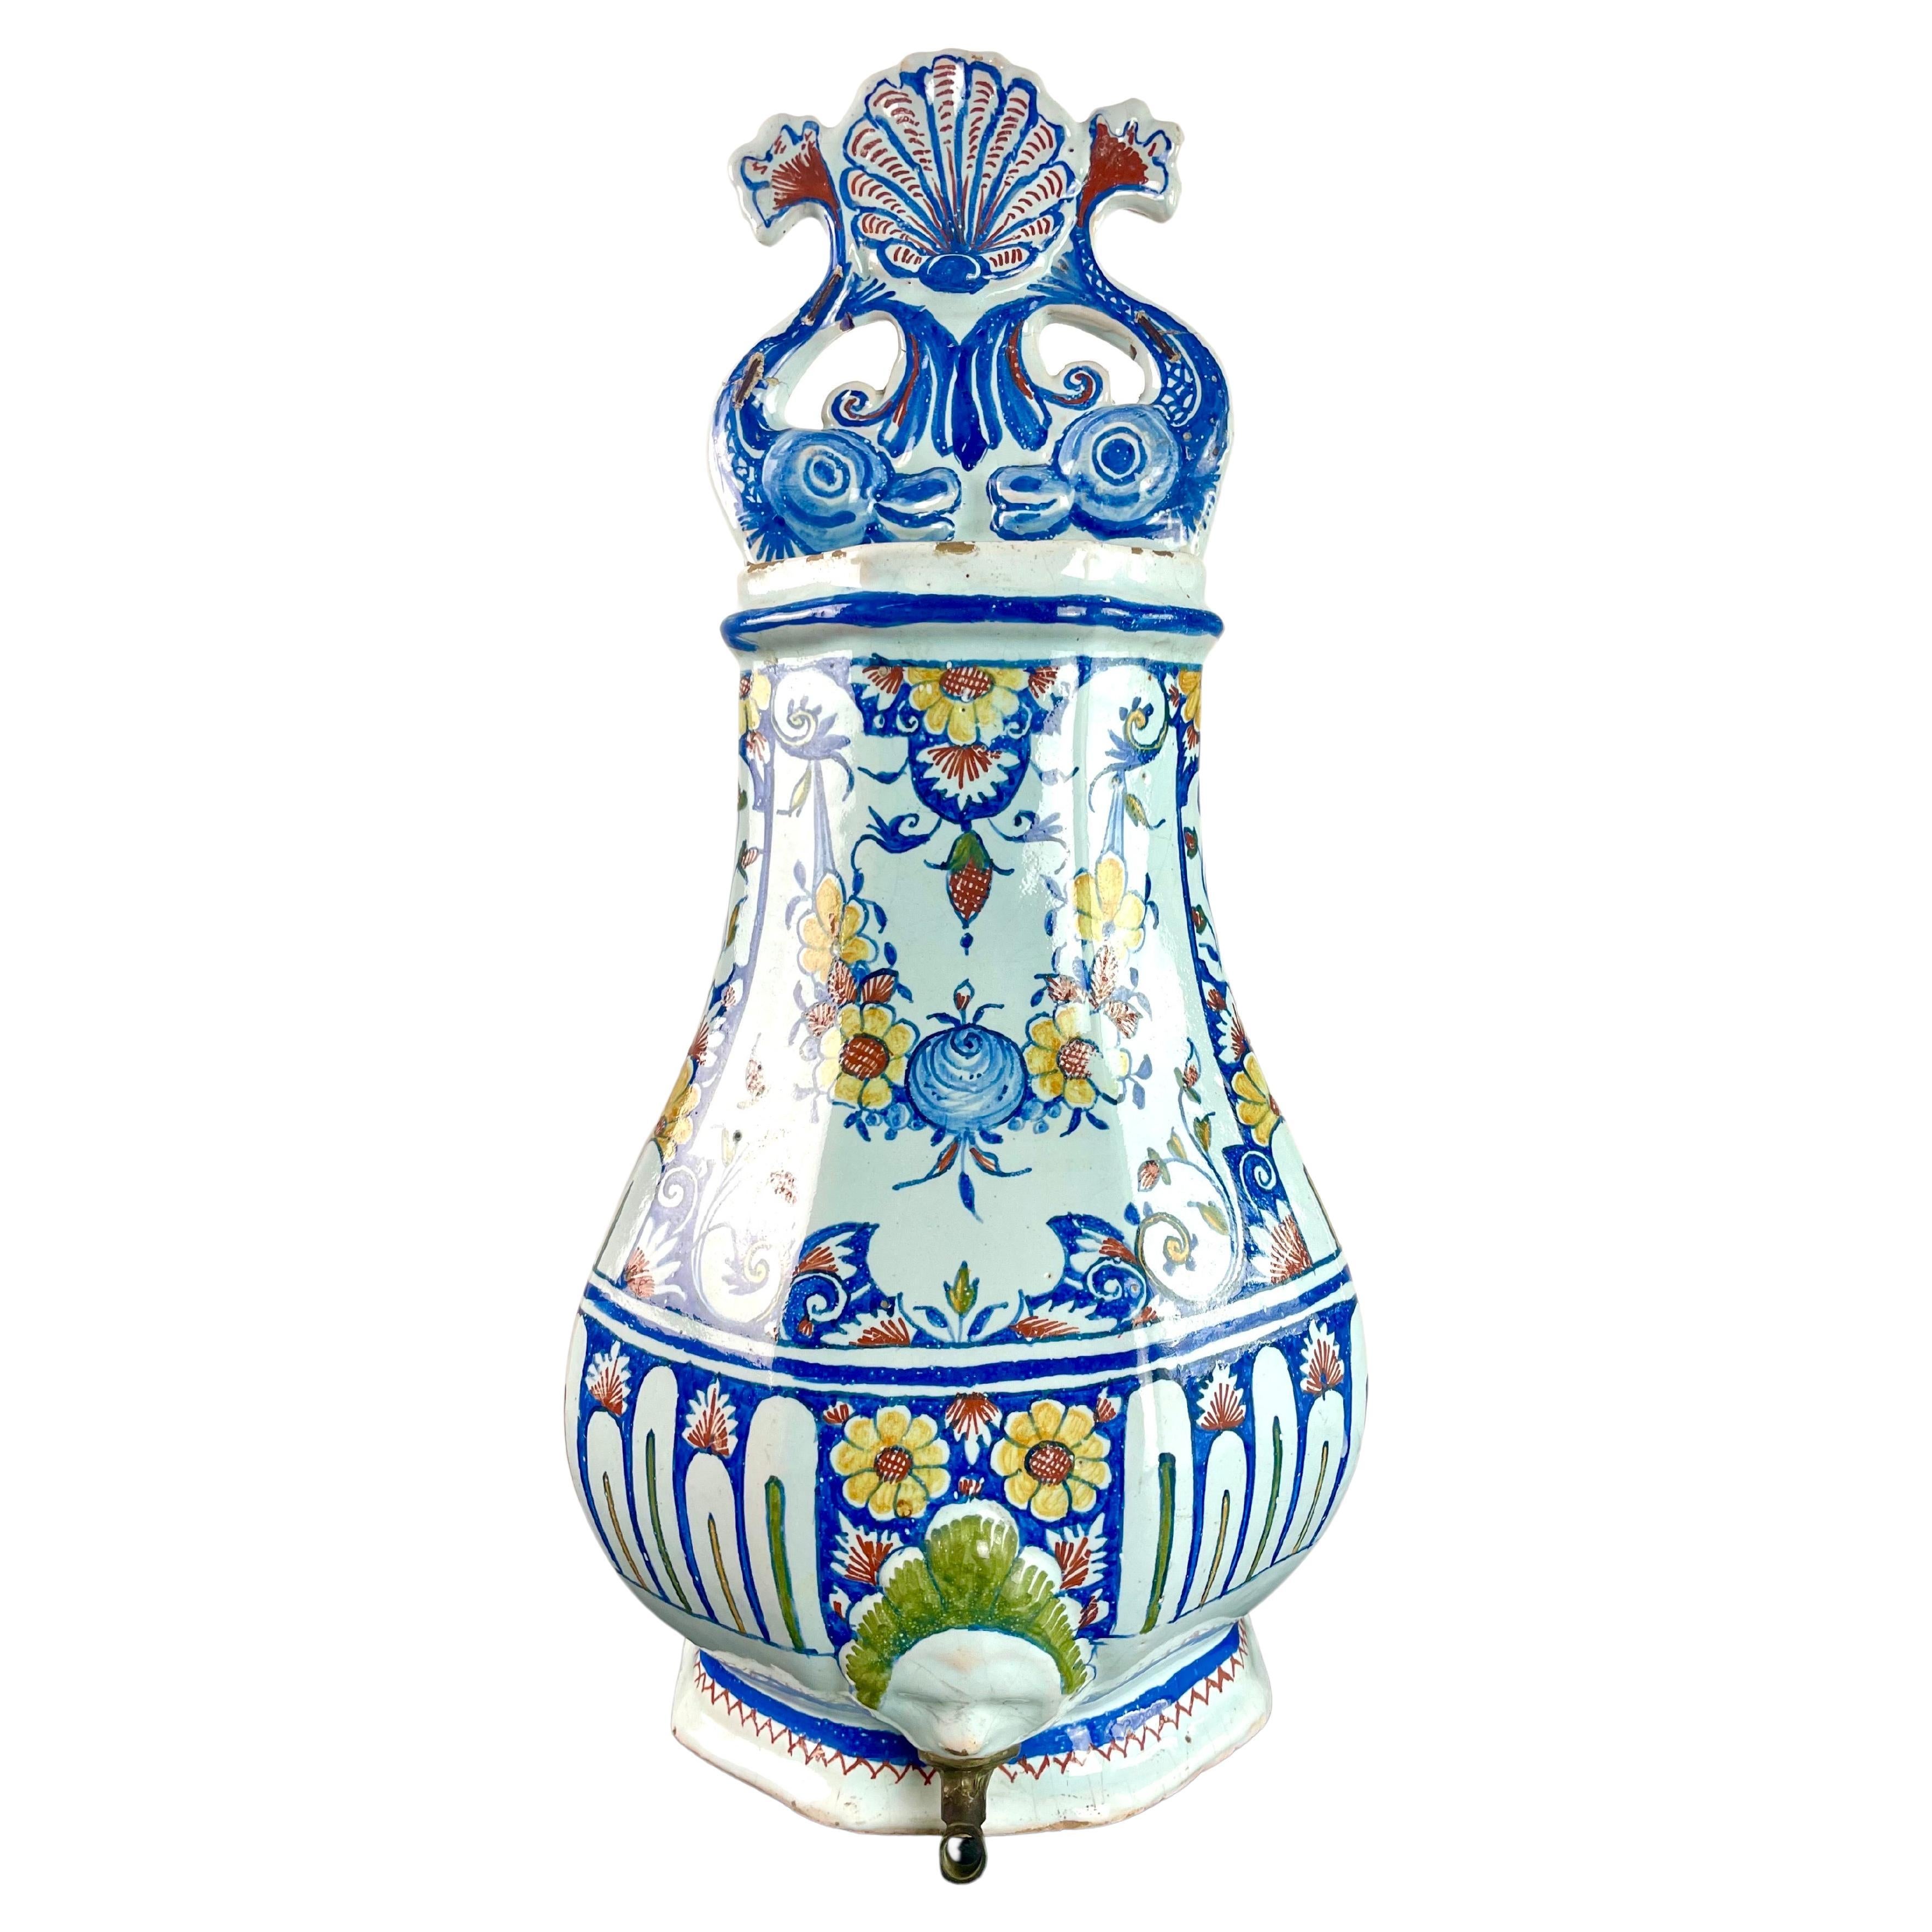 Vase - Rouen earthenware fountain, flower pot - blue white - 18th century France For Sale